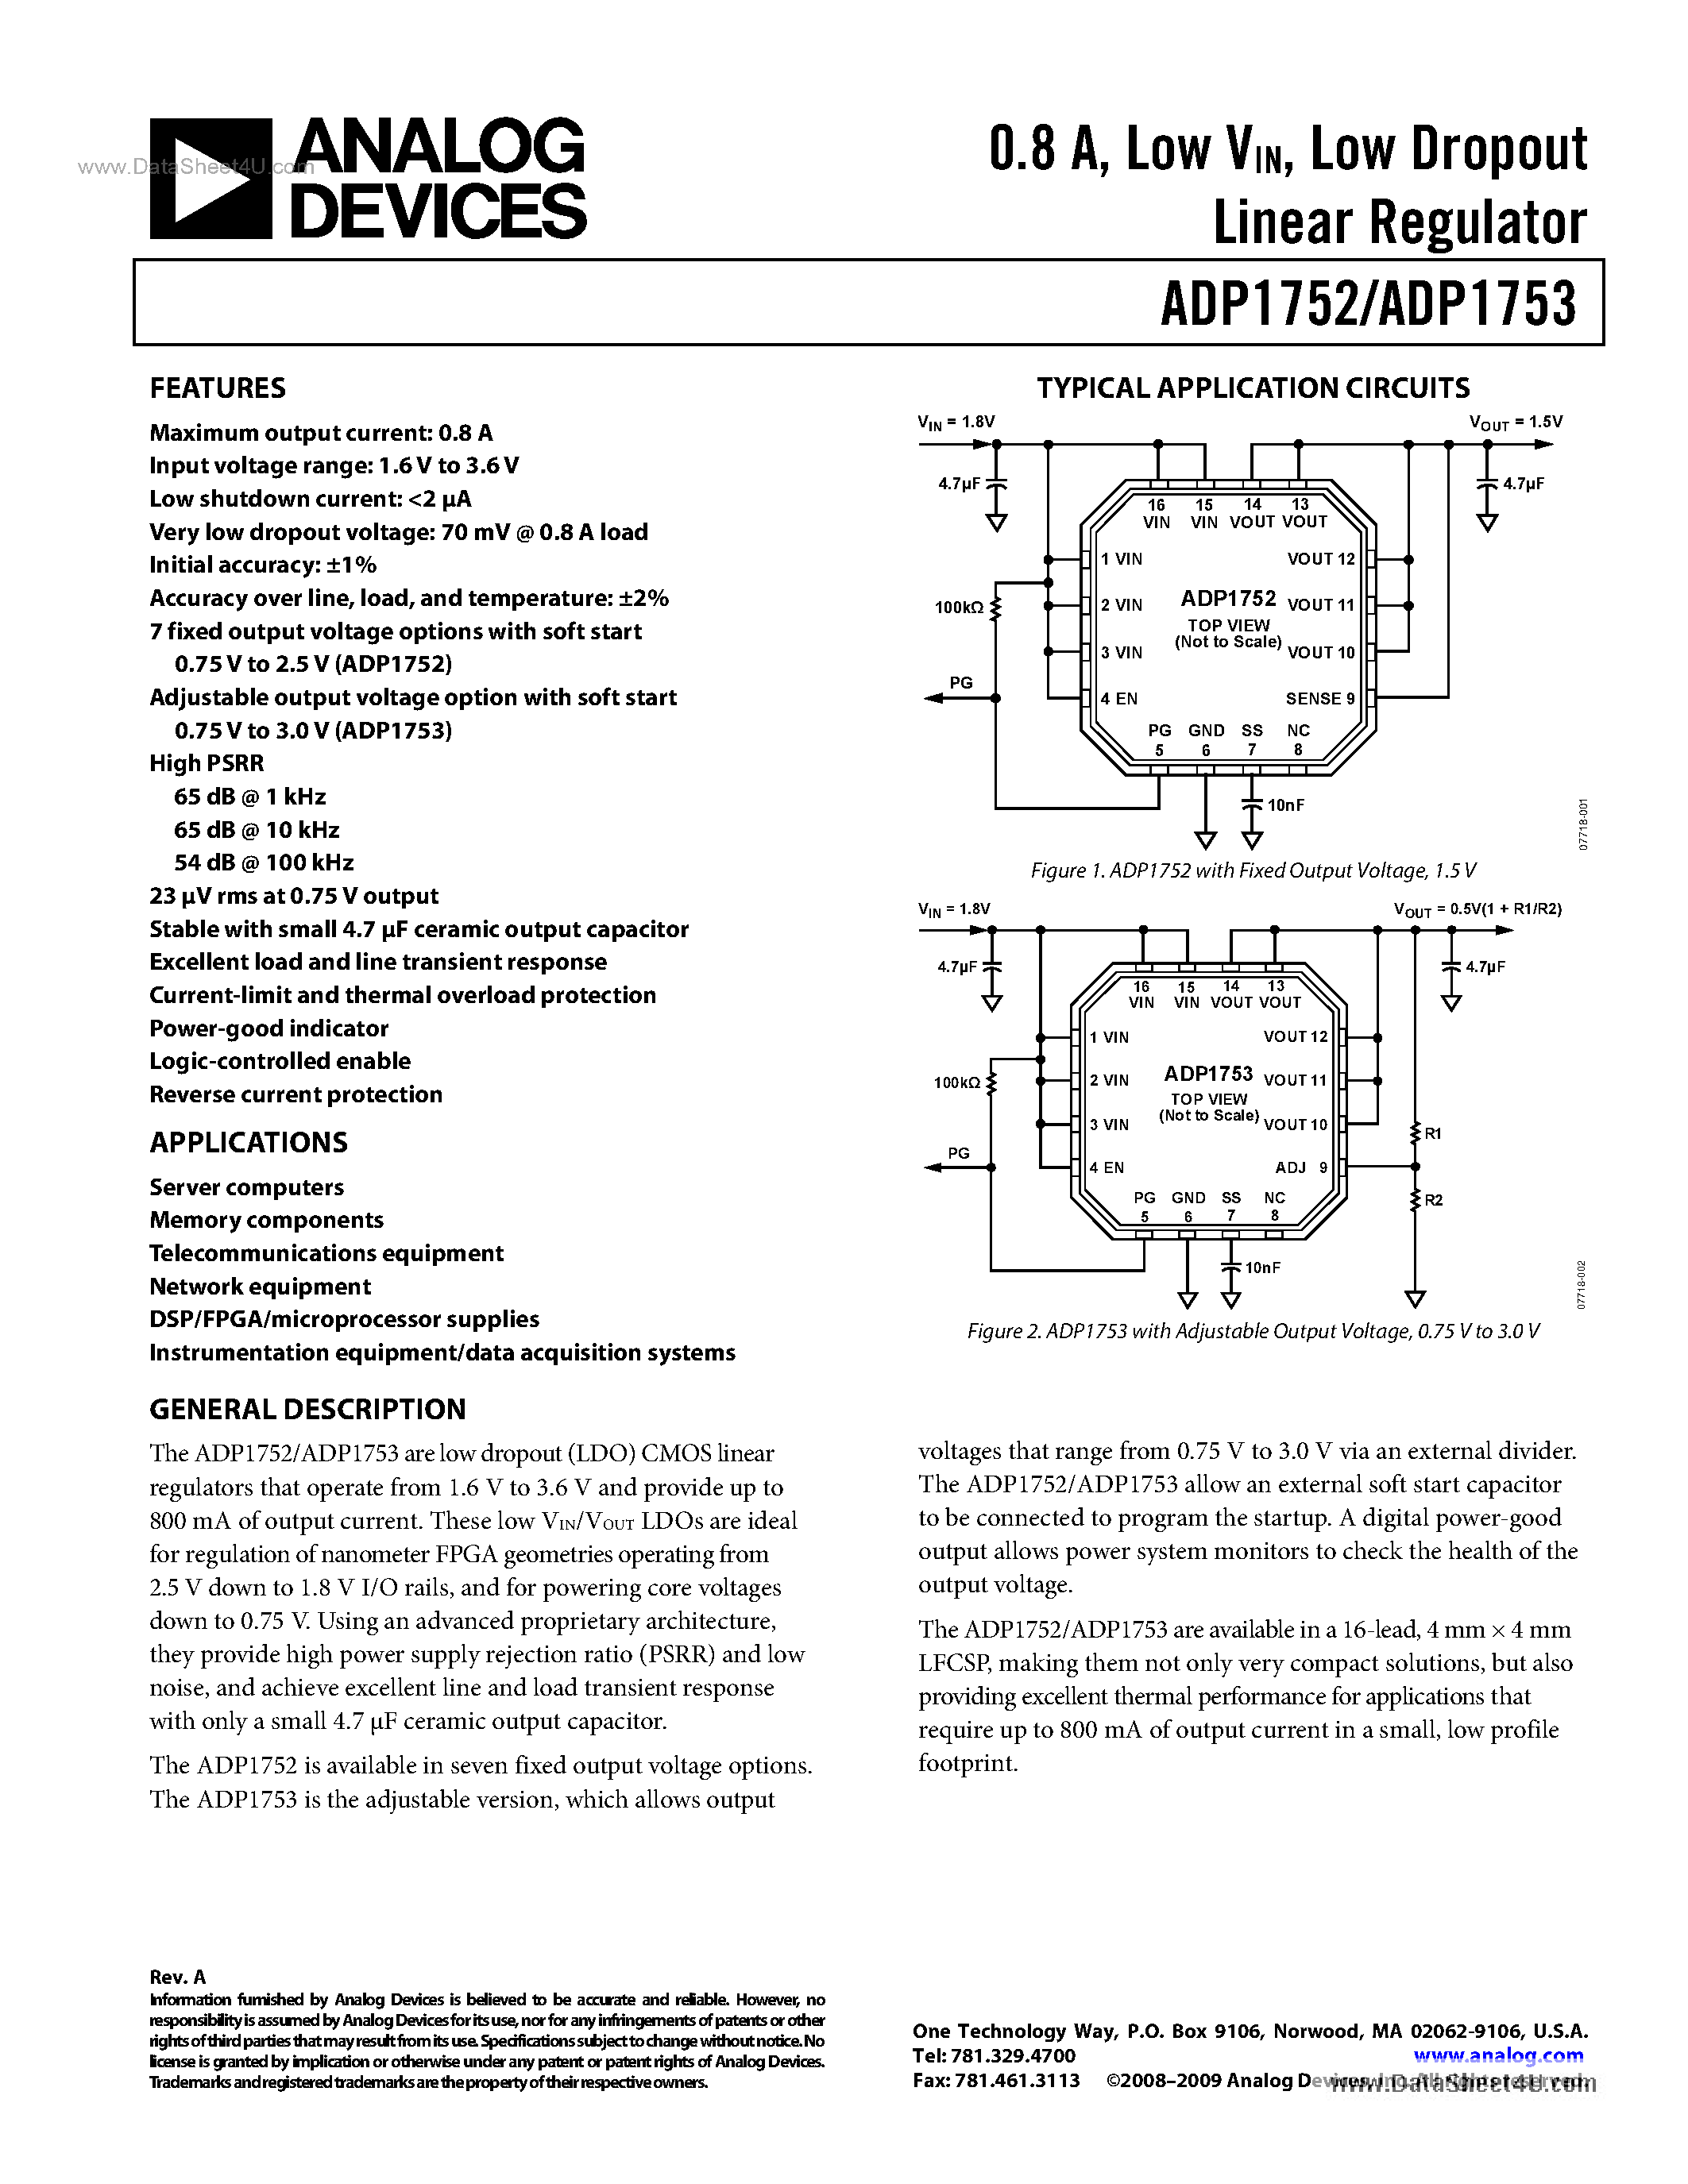 Datasheet ADP1752 - (ADP1752 / ADP1753) 800mA Low-Vin LDO Regulator page 1